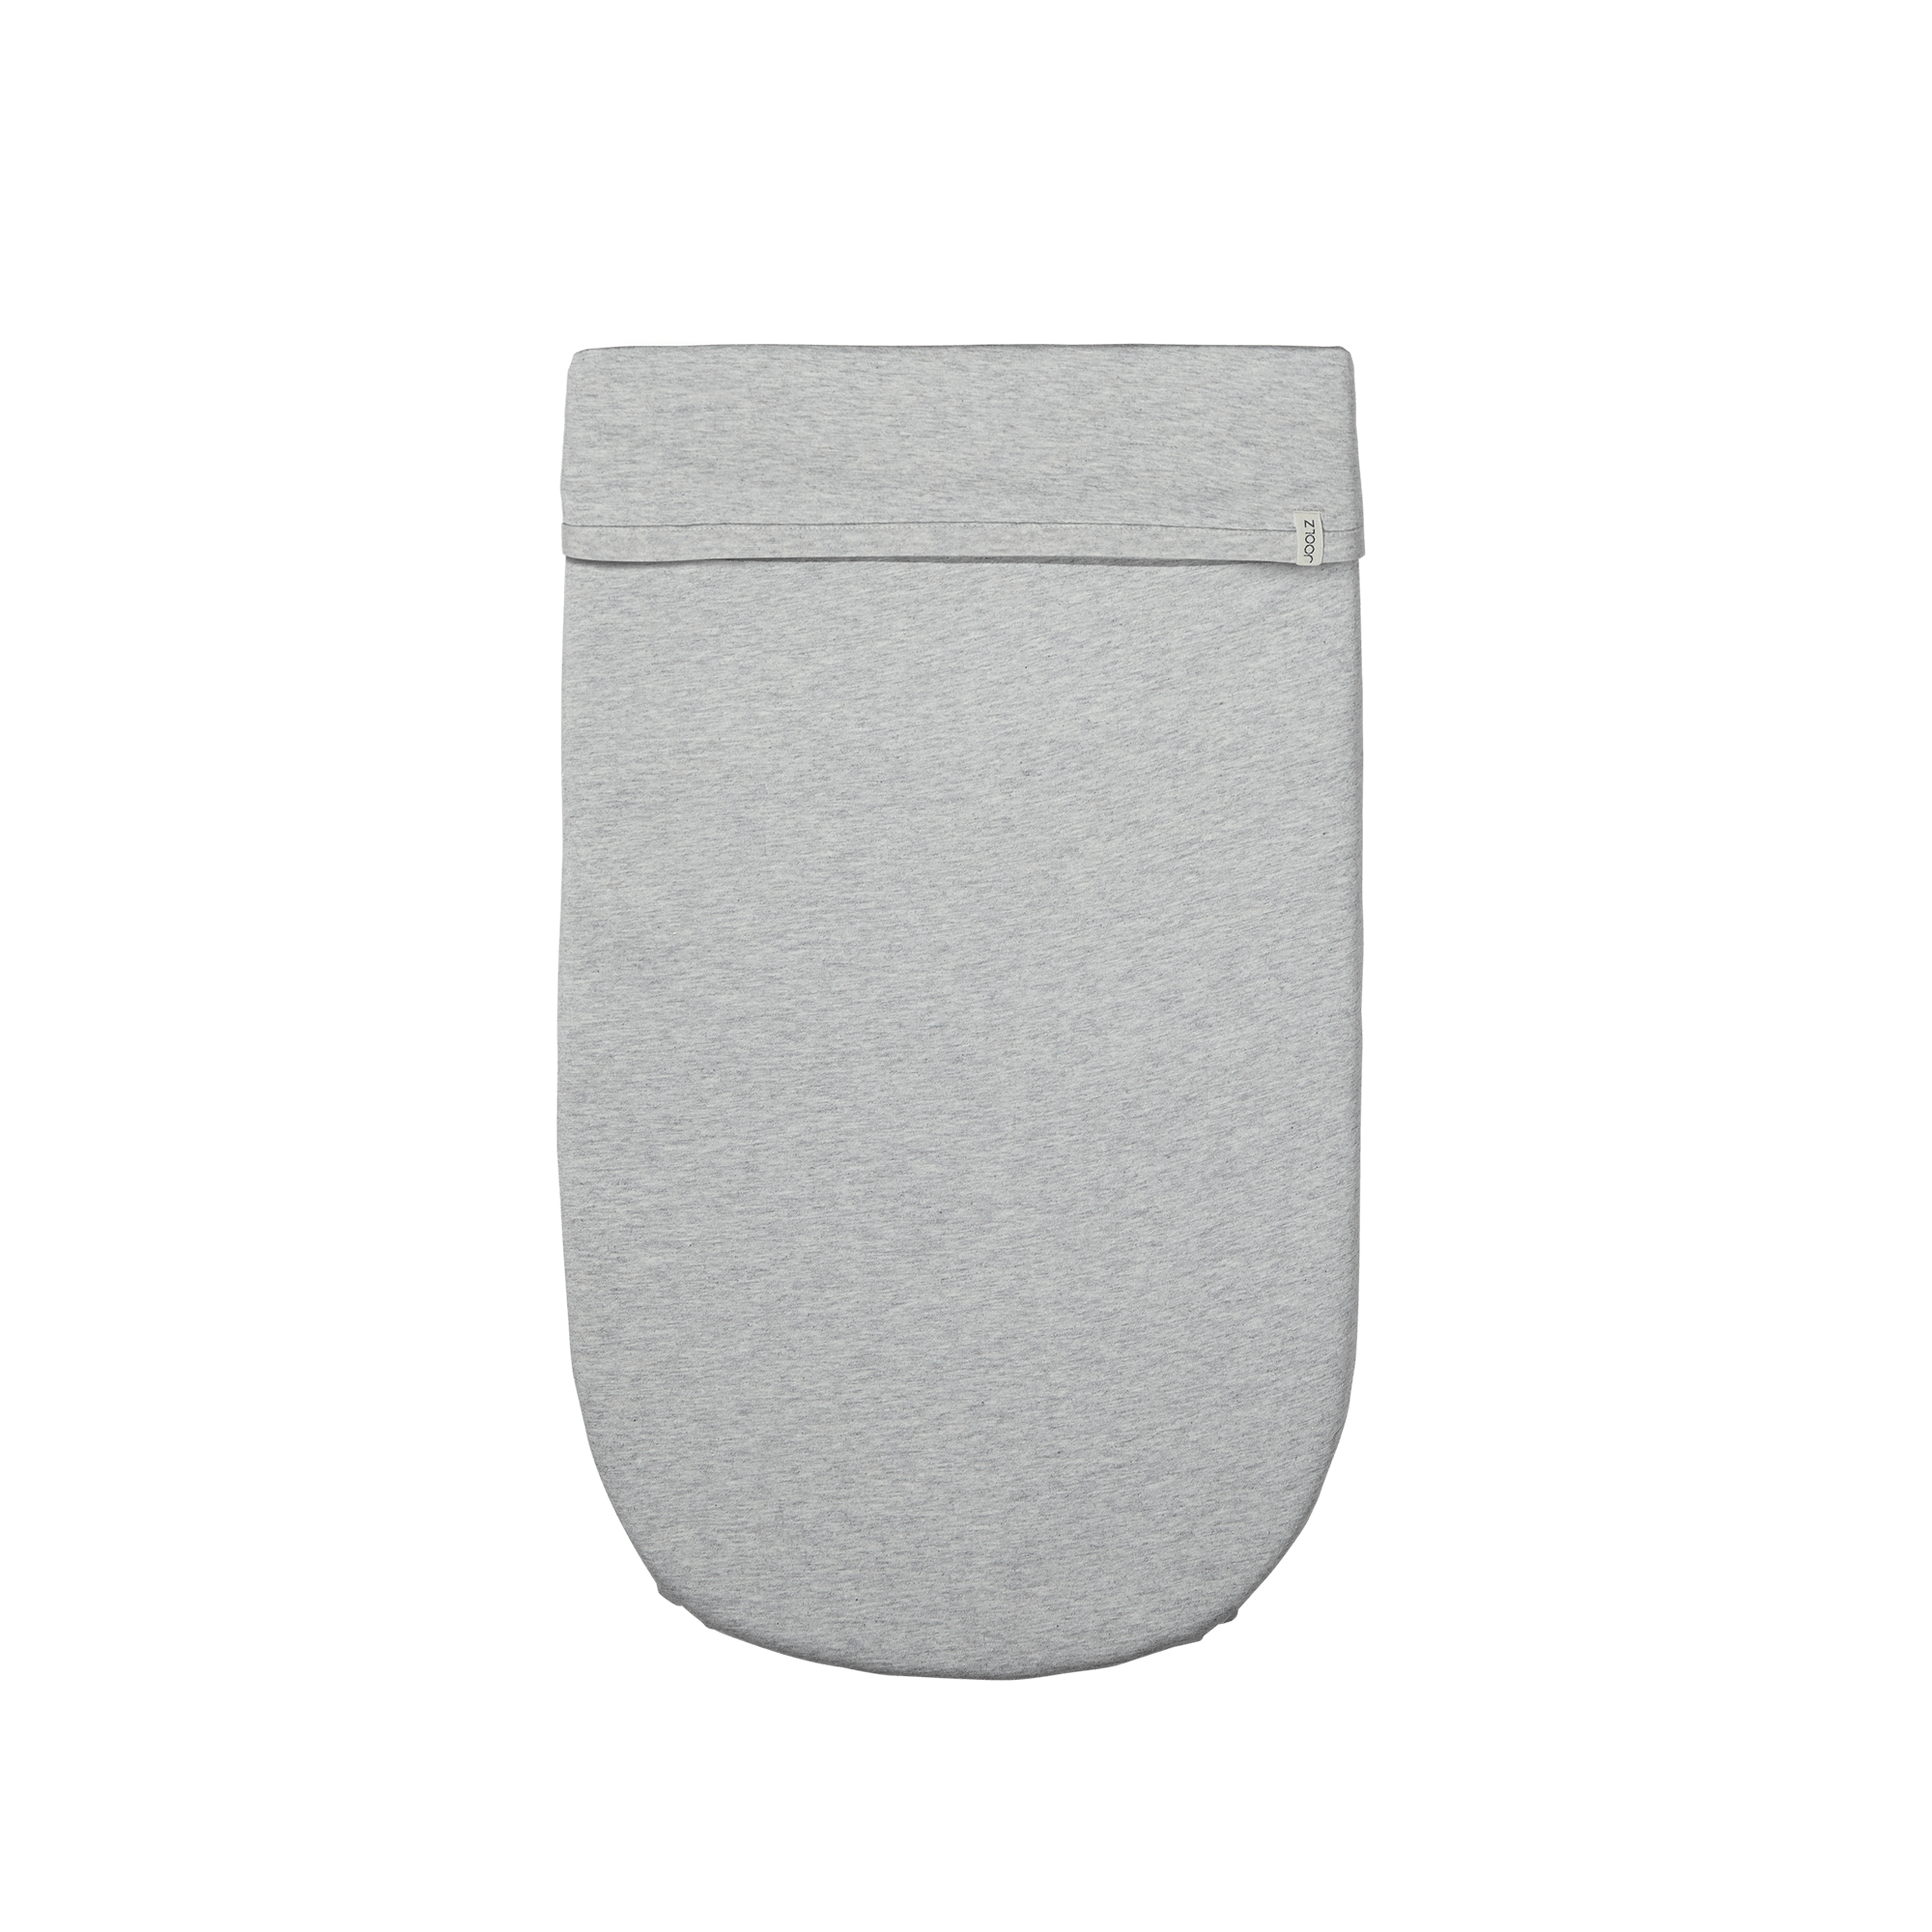 Joolz Essentials Sheet, Grey Melange - ANB Baby -fitted sheet